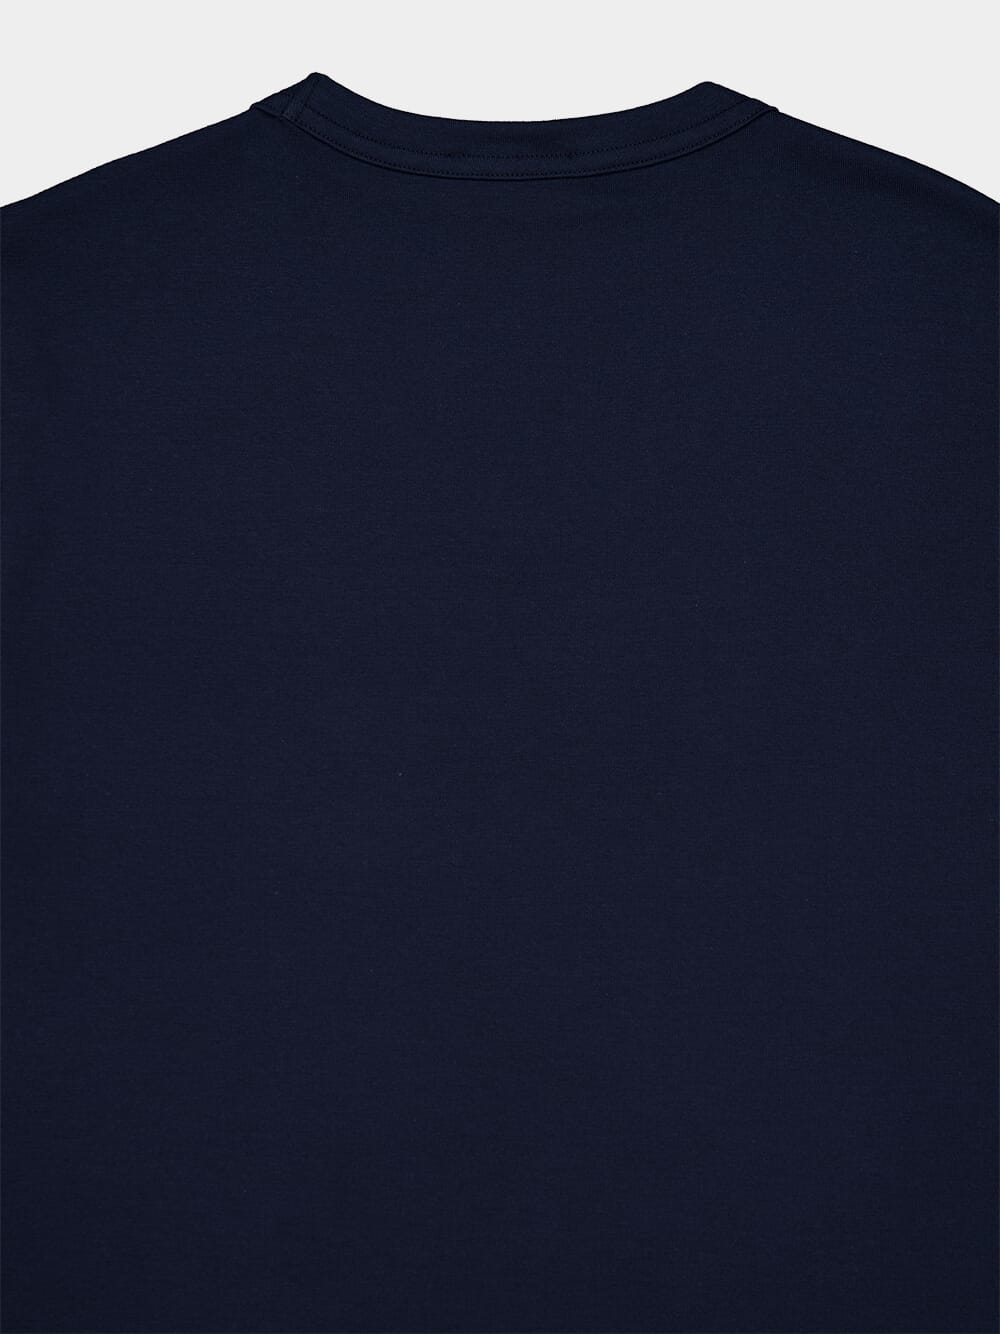 Tom FordClassic V-Neck Navy T-Shirt at Fashion Clinic